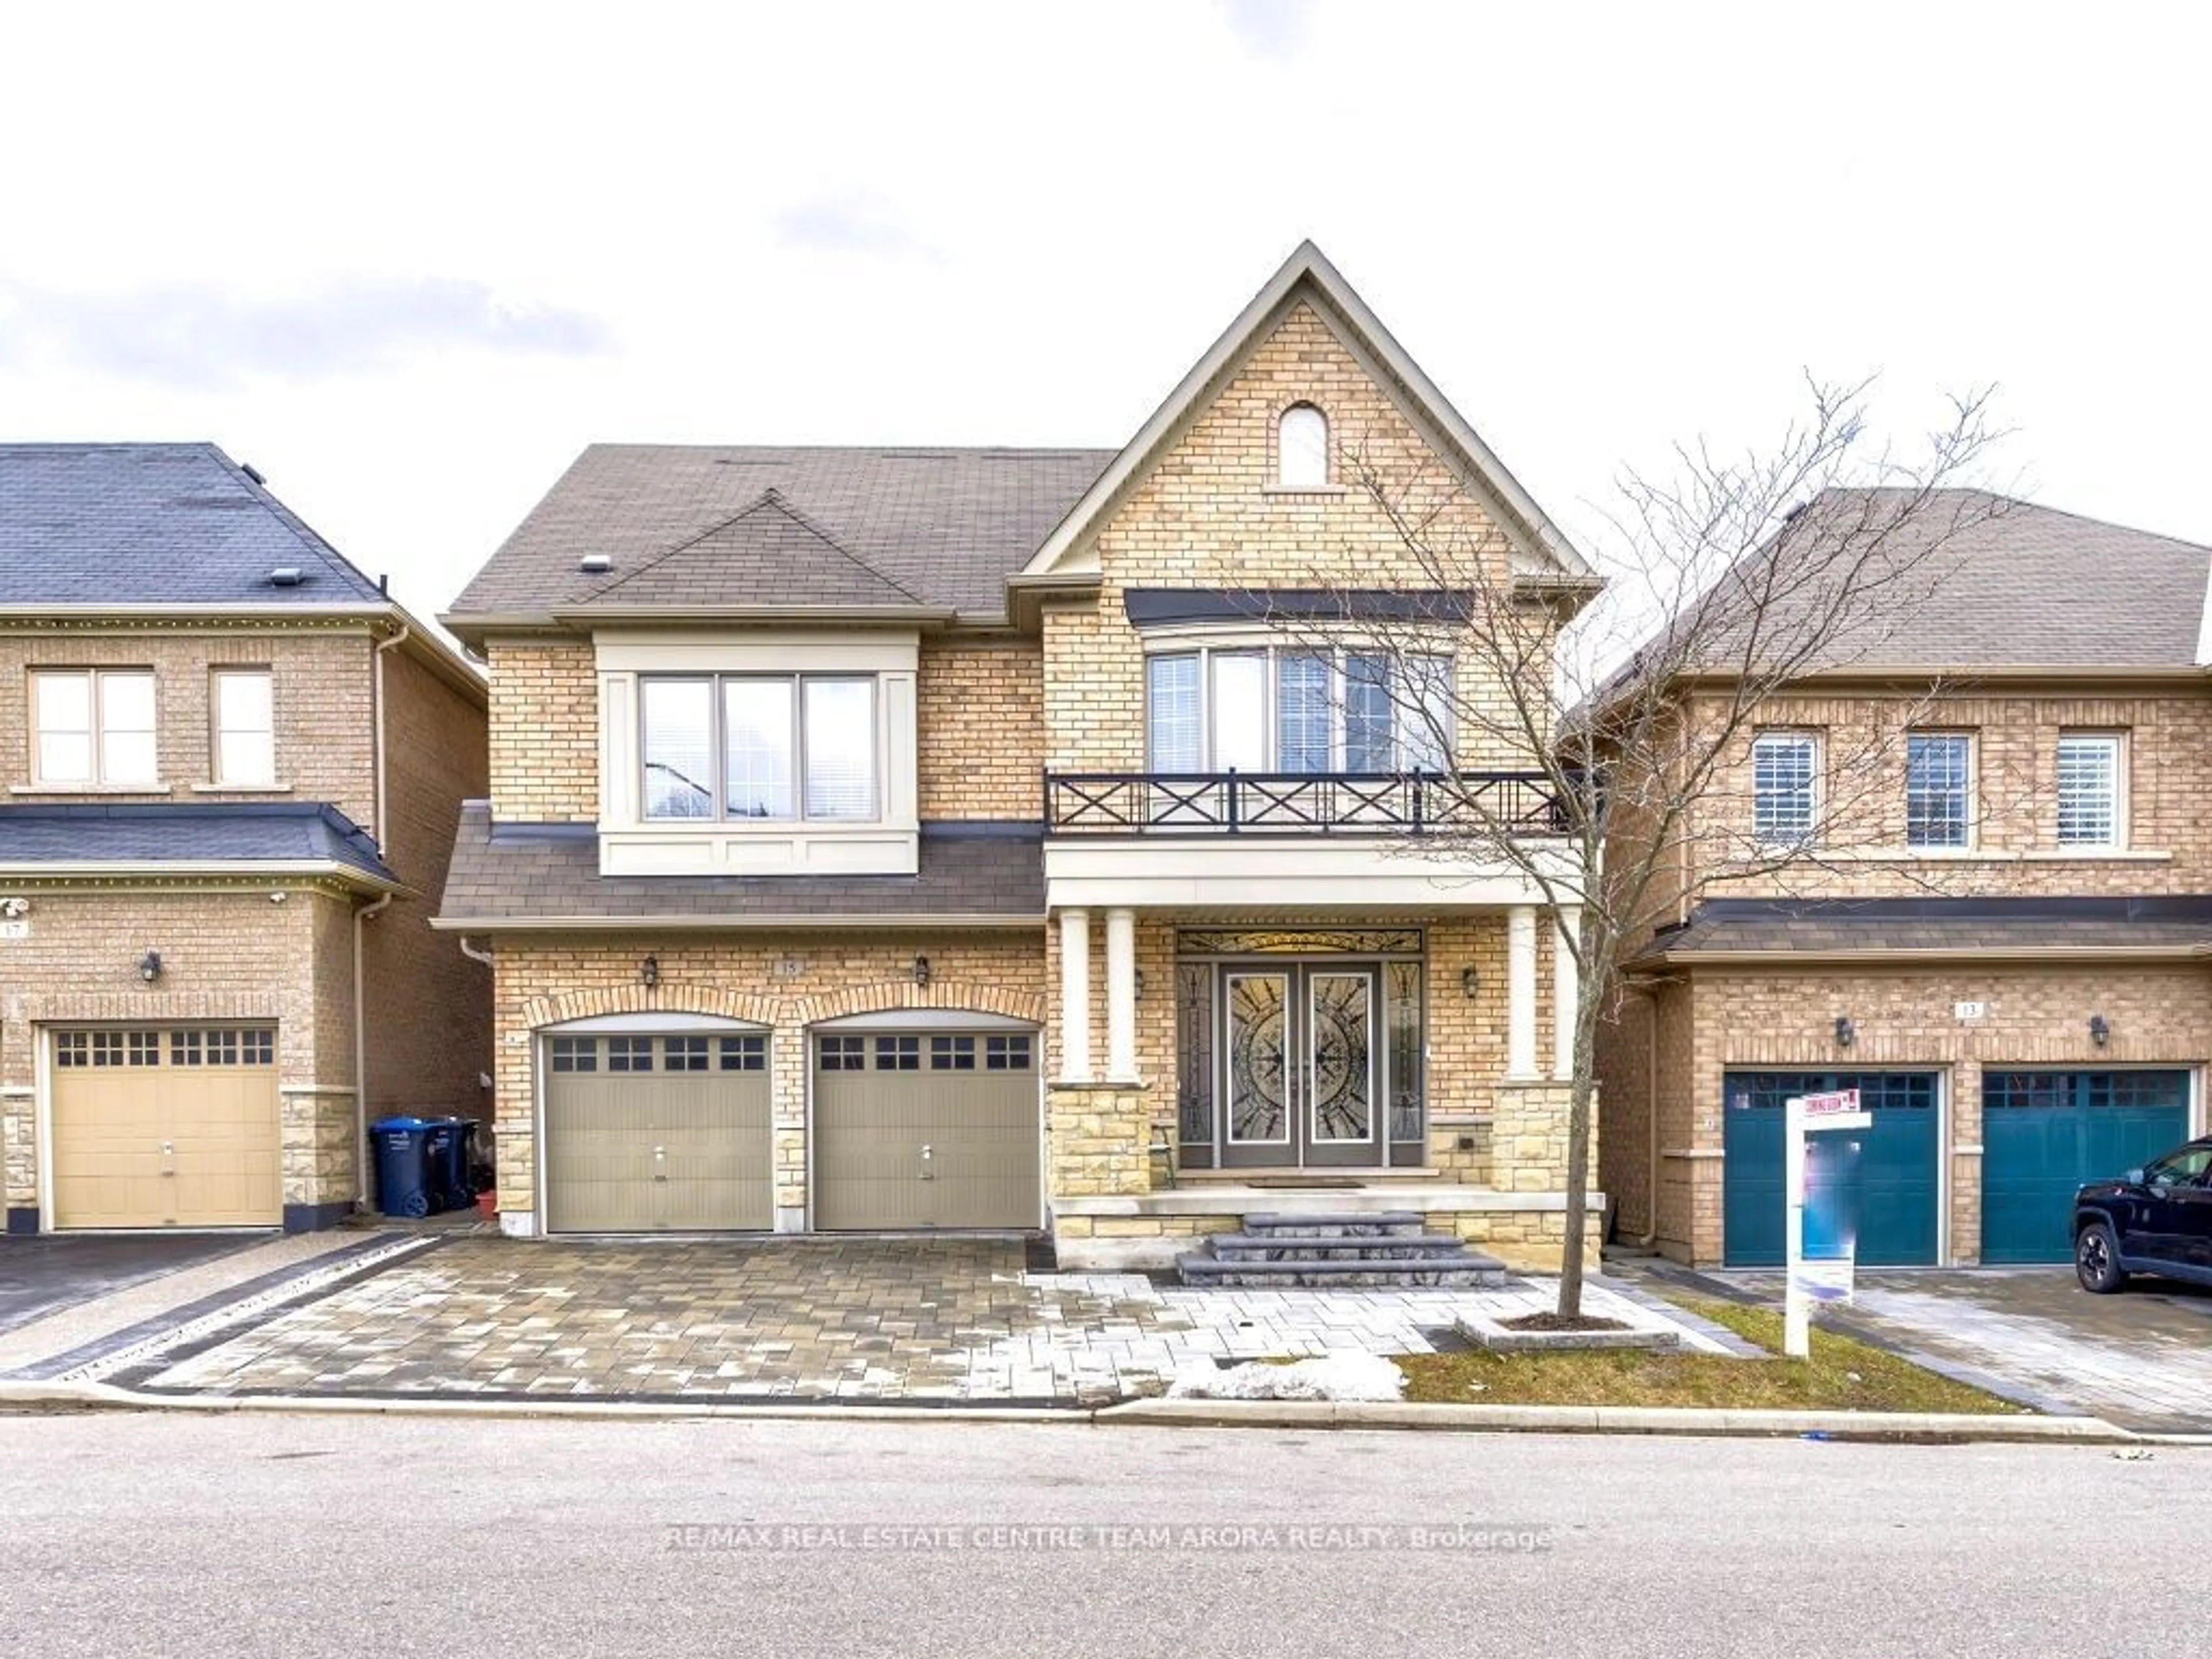 Home with brick exterior material for 15 Cranwood Circ, Brampton Ontario L6Y 0Y4